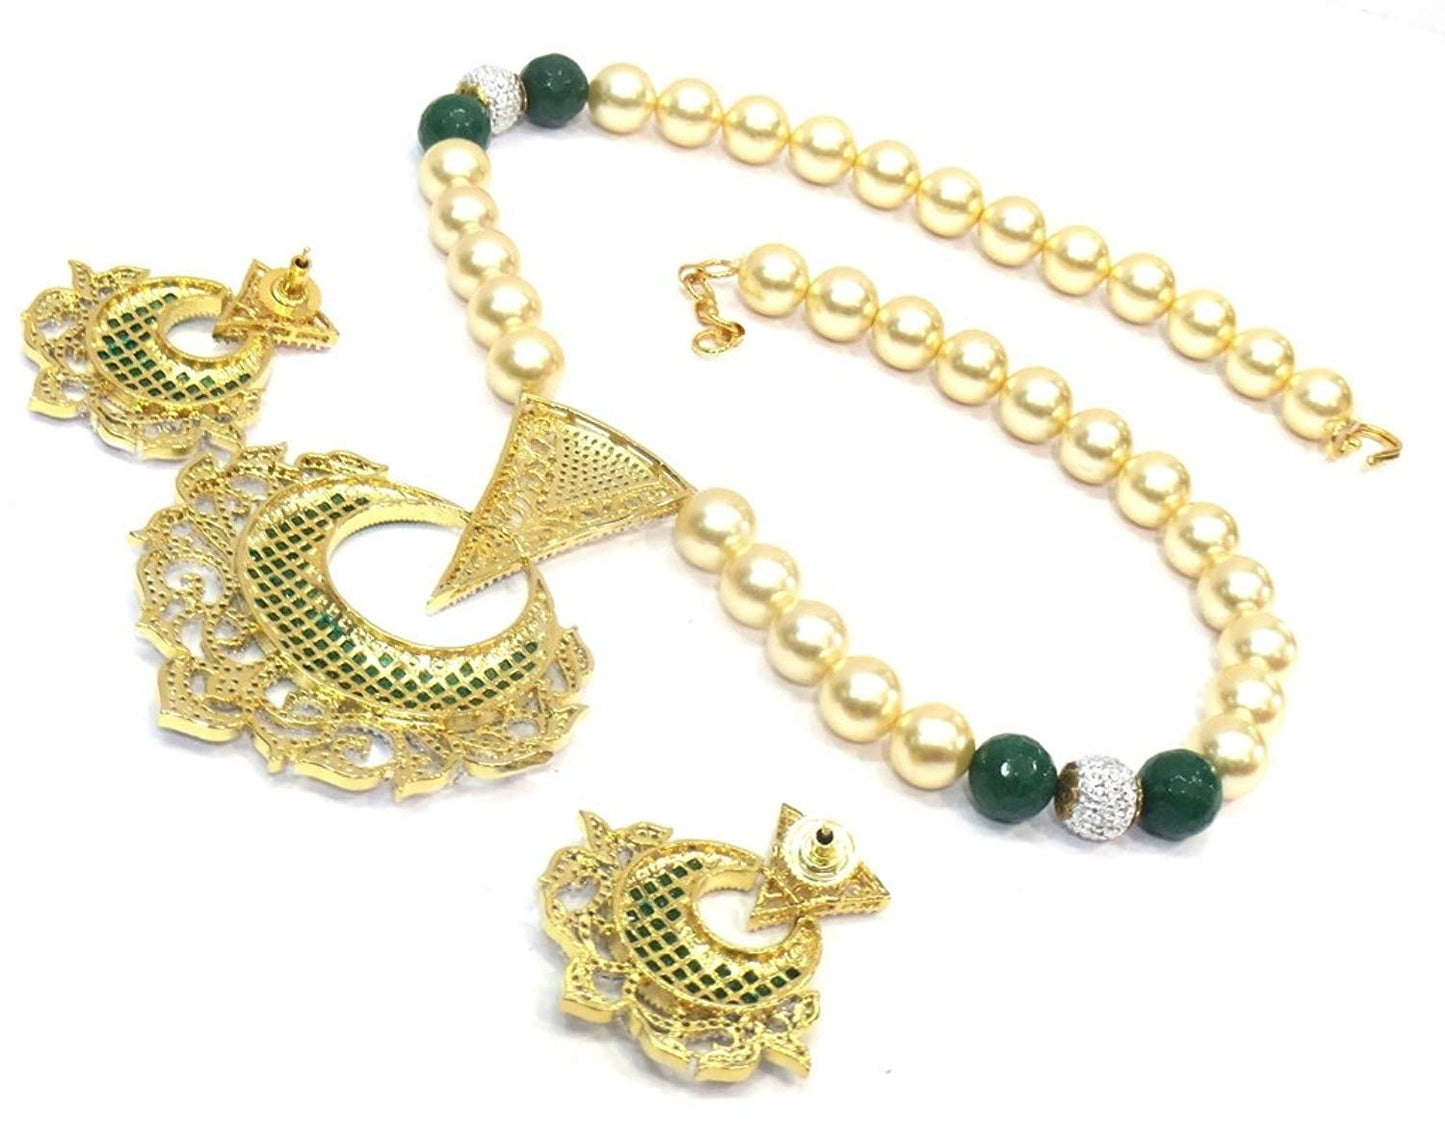 Jewelshingar Jewellery American Diamond Necklace Set For Girls ( 17428-nad-green )